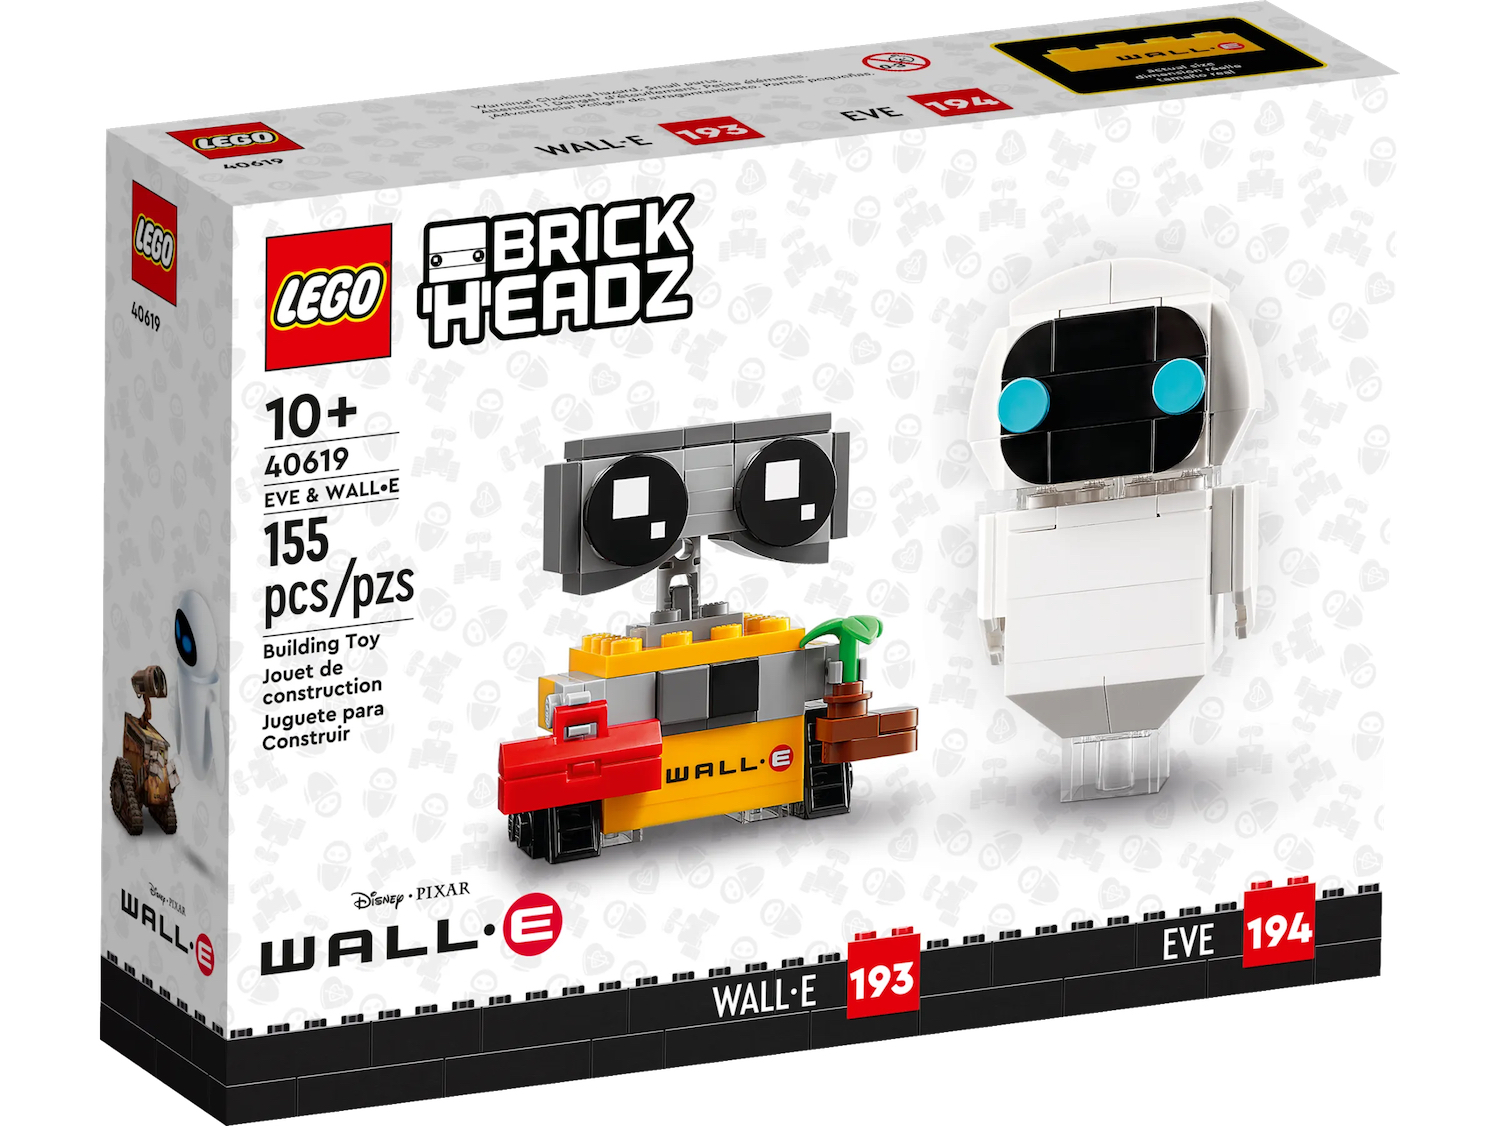 LEGO kondigt nieuwe Disney BrickHeadz-sets aan